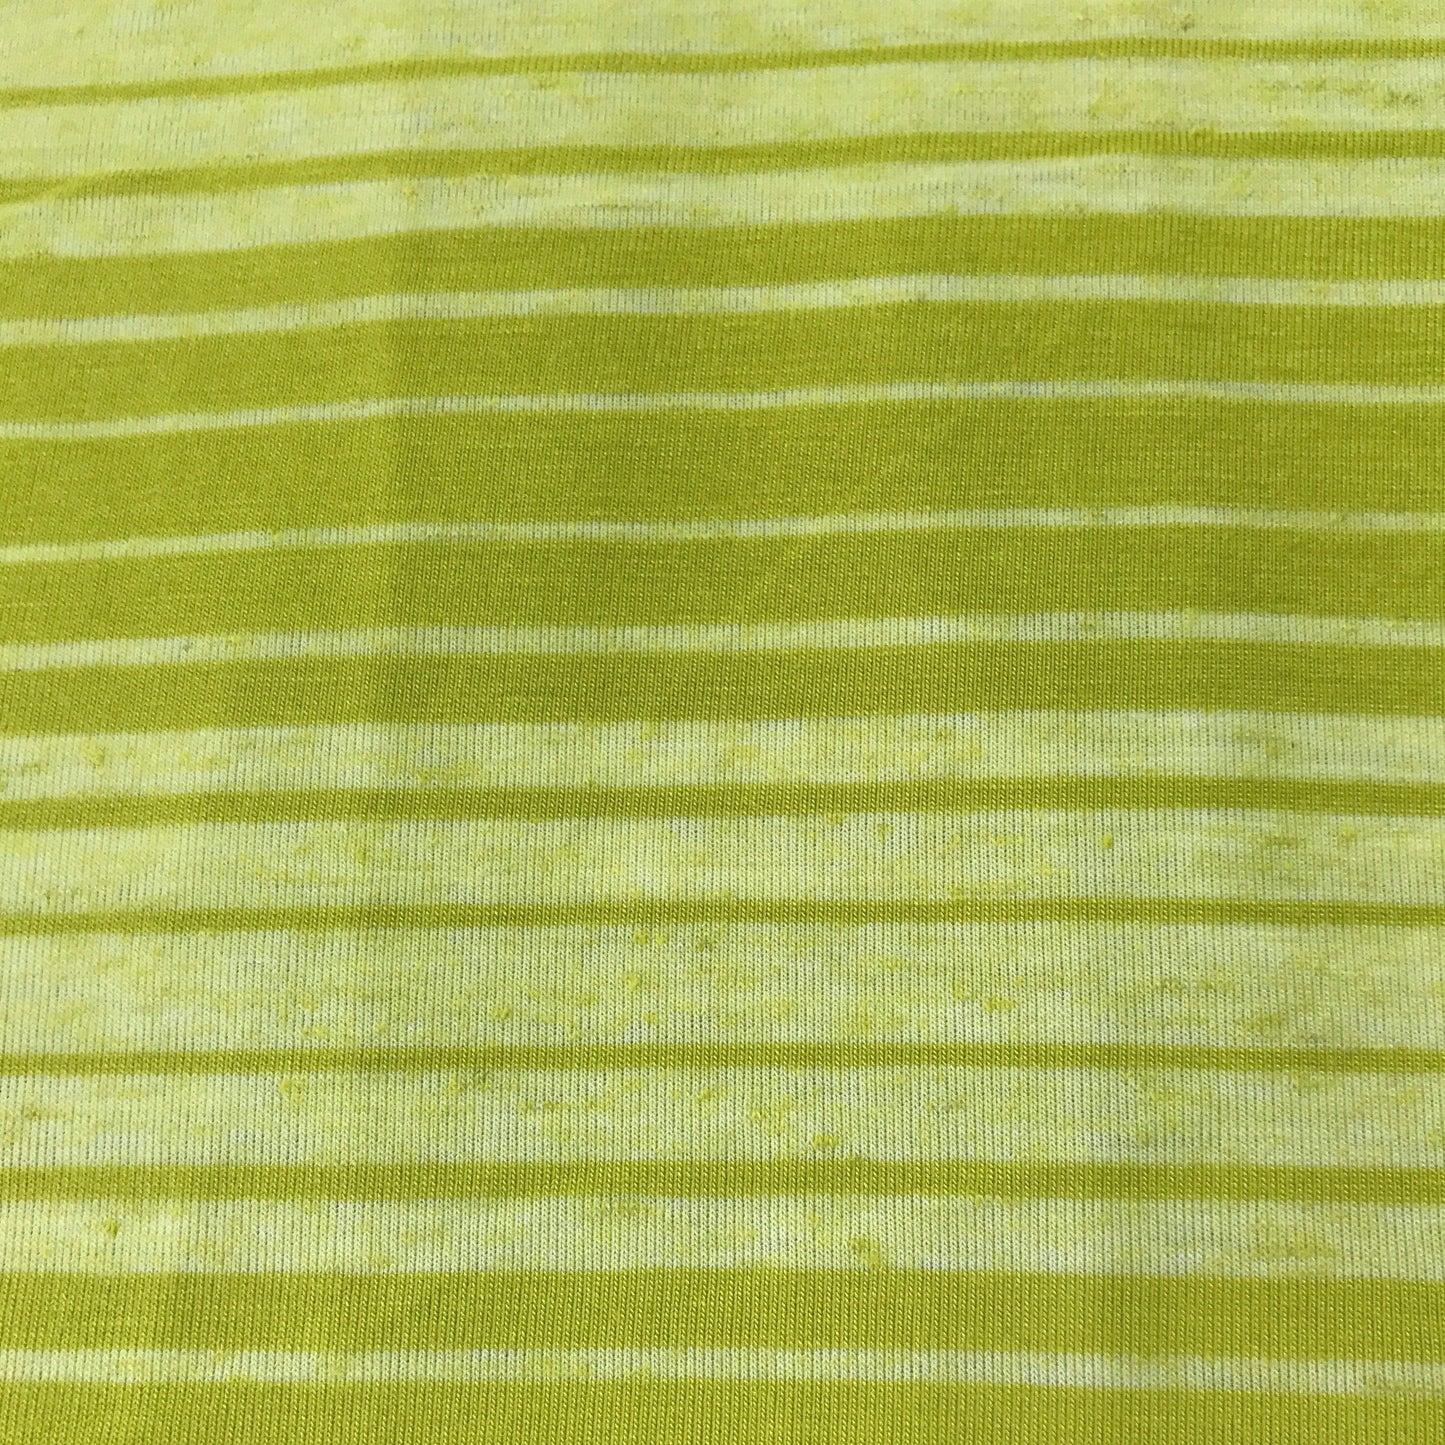 Citrus Stripes on Bamboo/Spandex Jersey Fabric - Nature's Fabrics